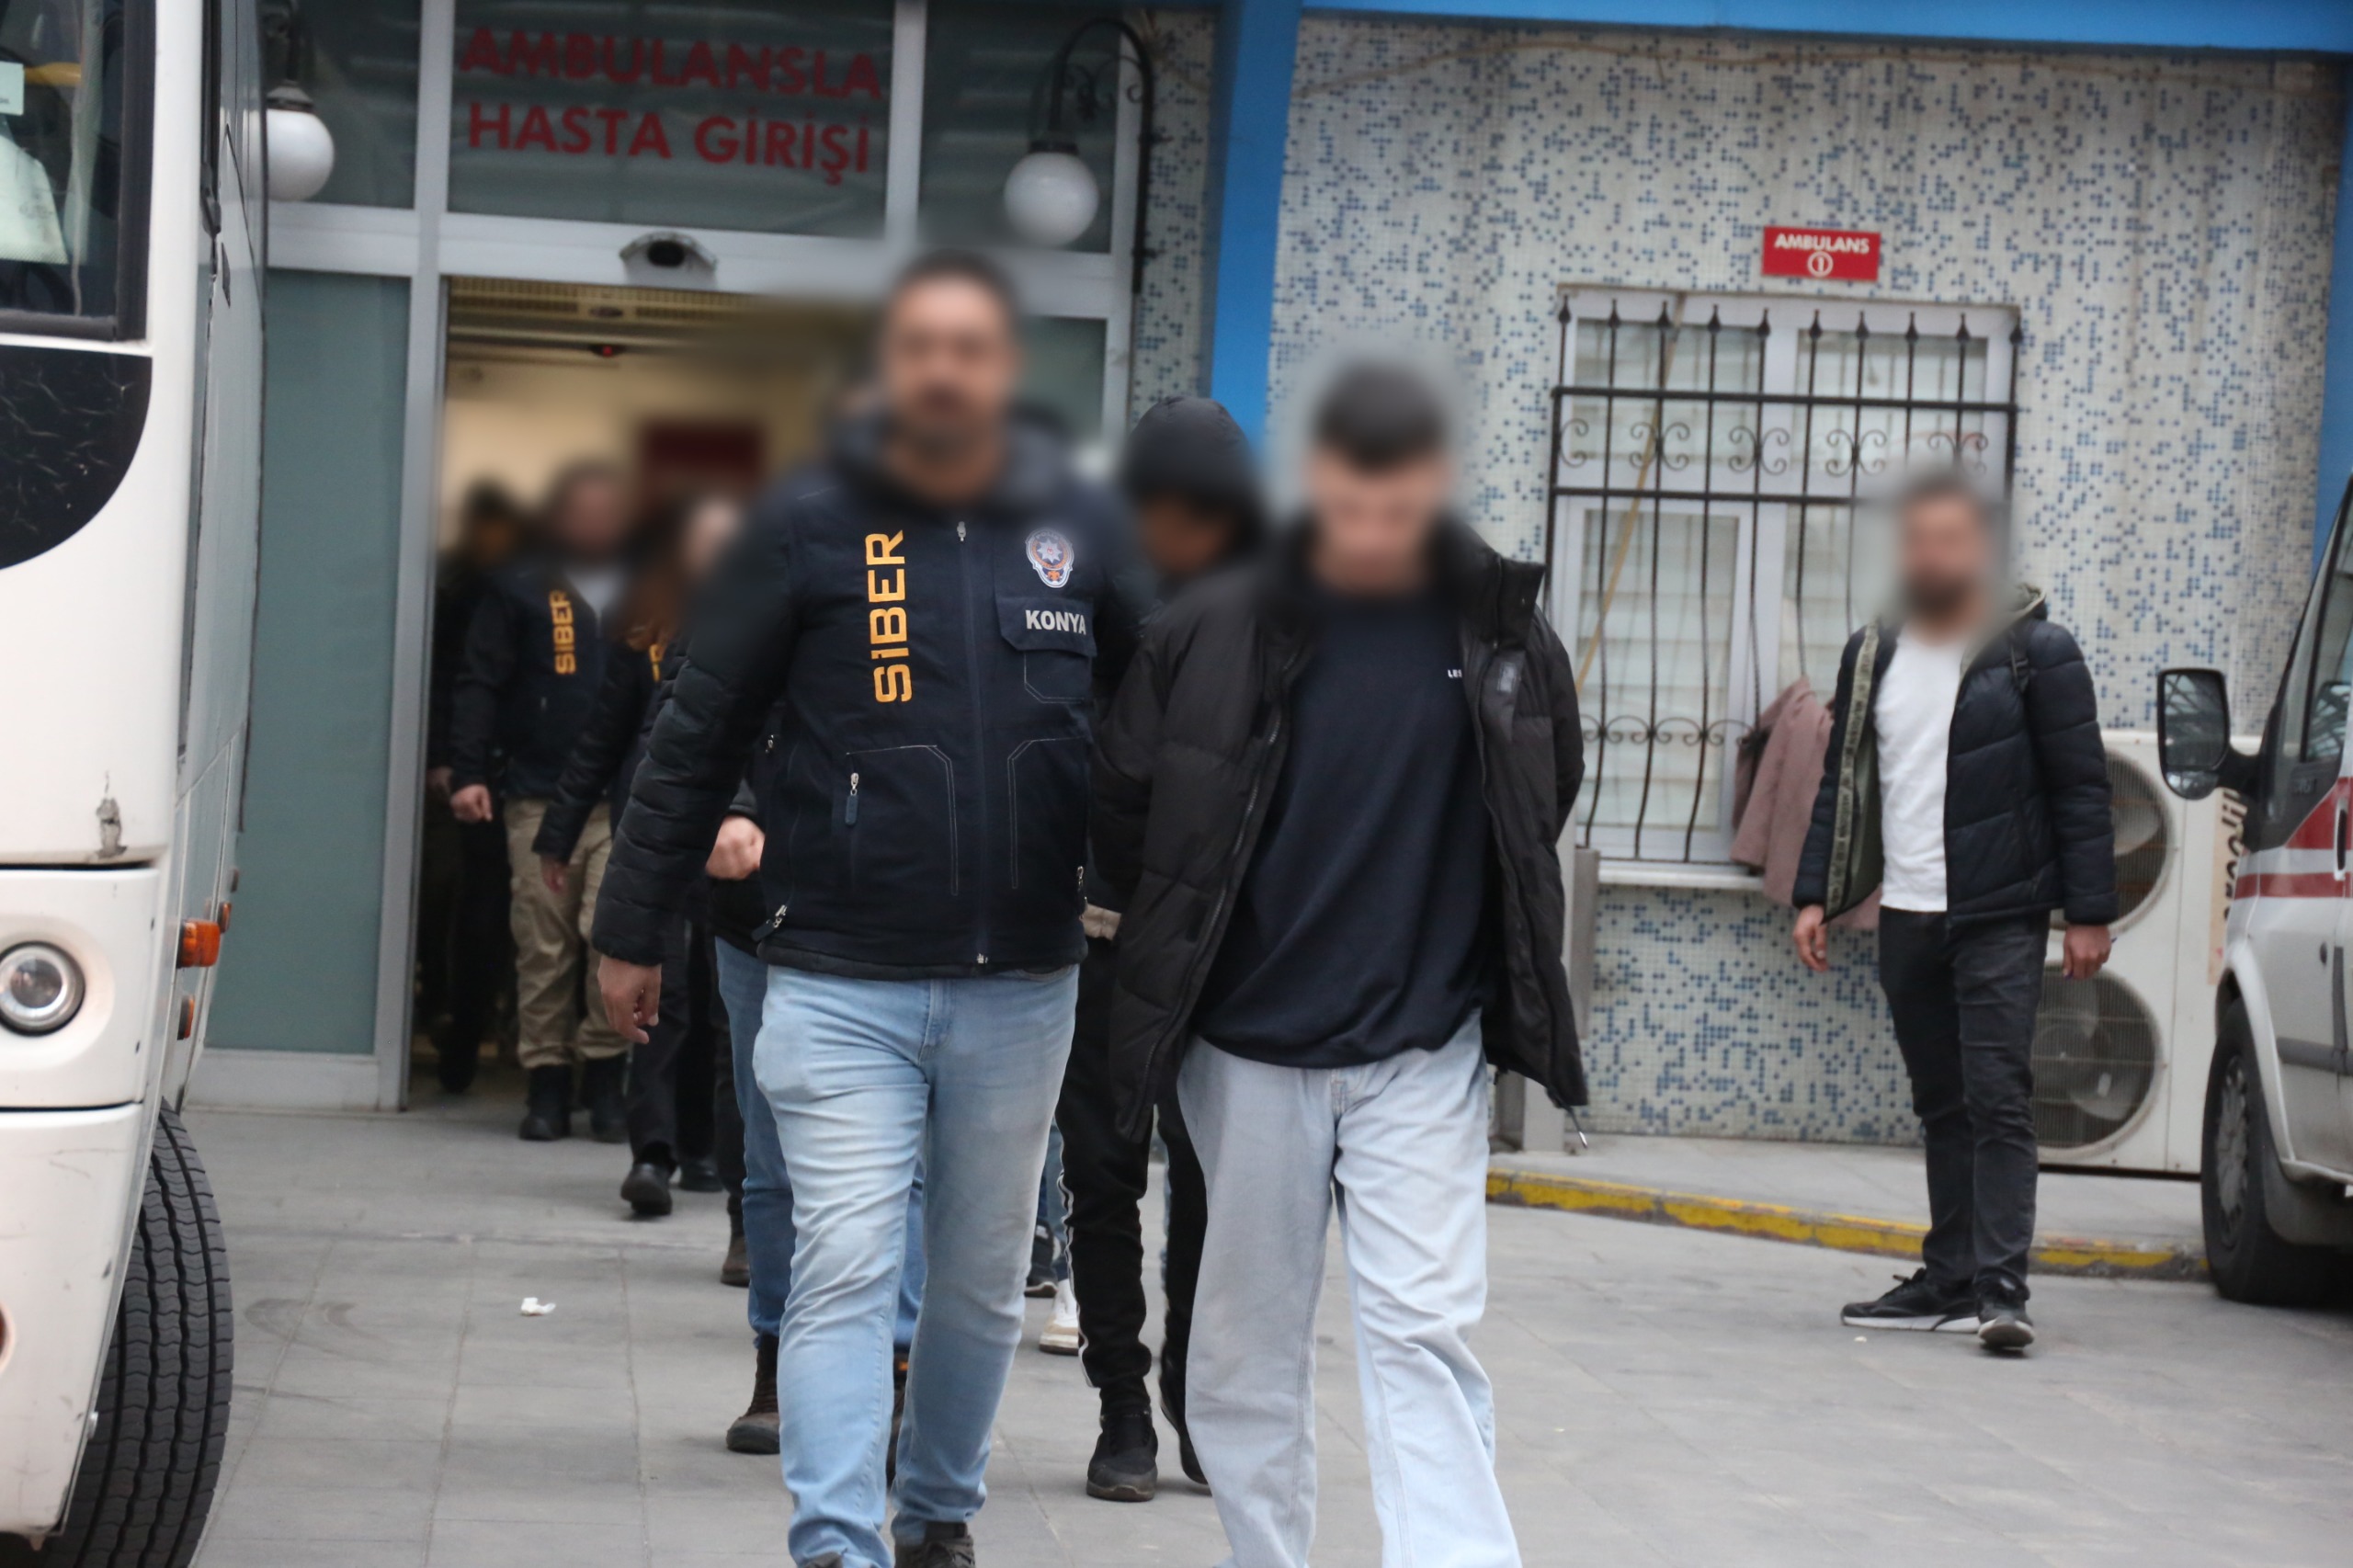 Siber polisten Konya merkezli 10 ilde dev operasyon